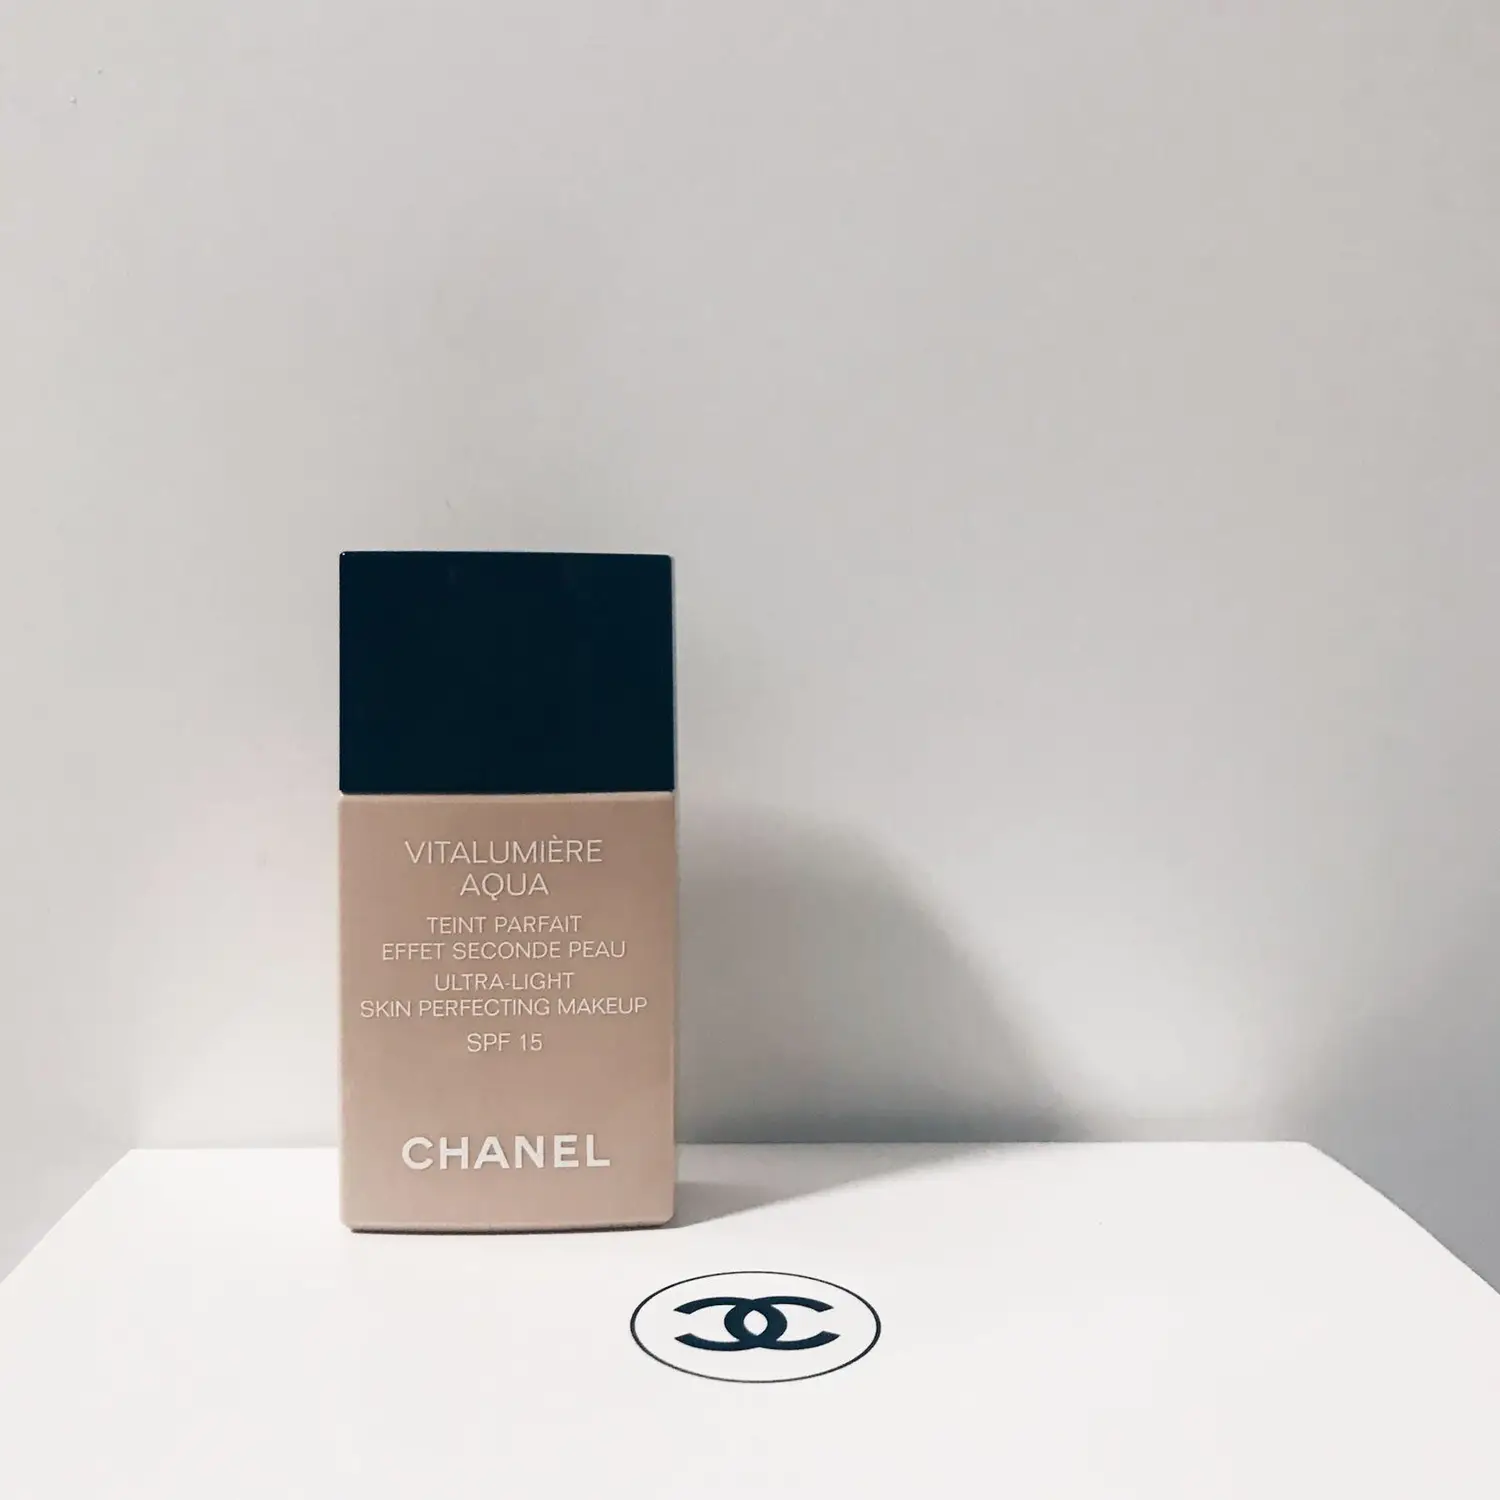 Chanel Vitalumière Aqua Review - THE STYLING DUTCHMAN.